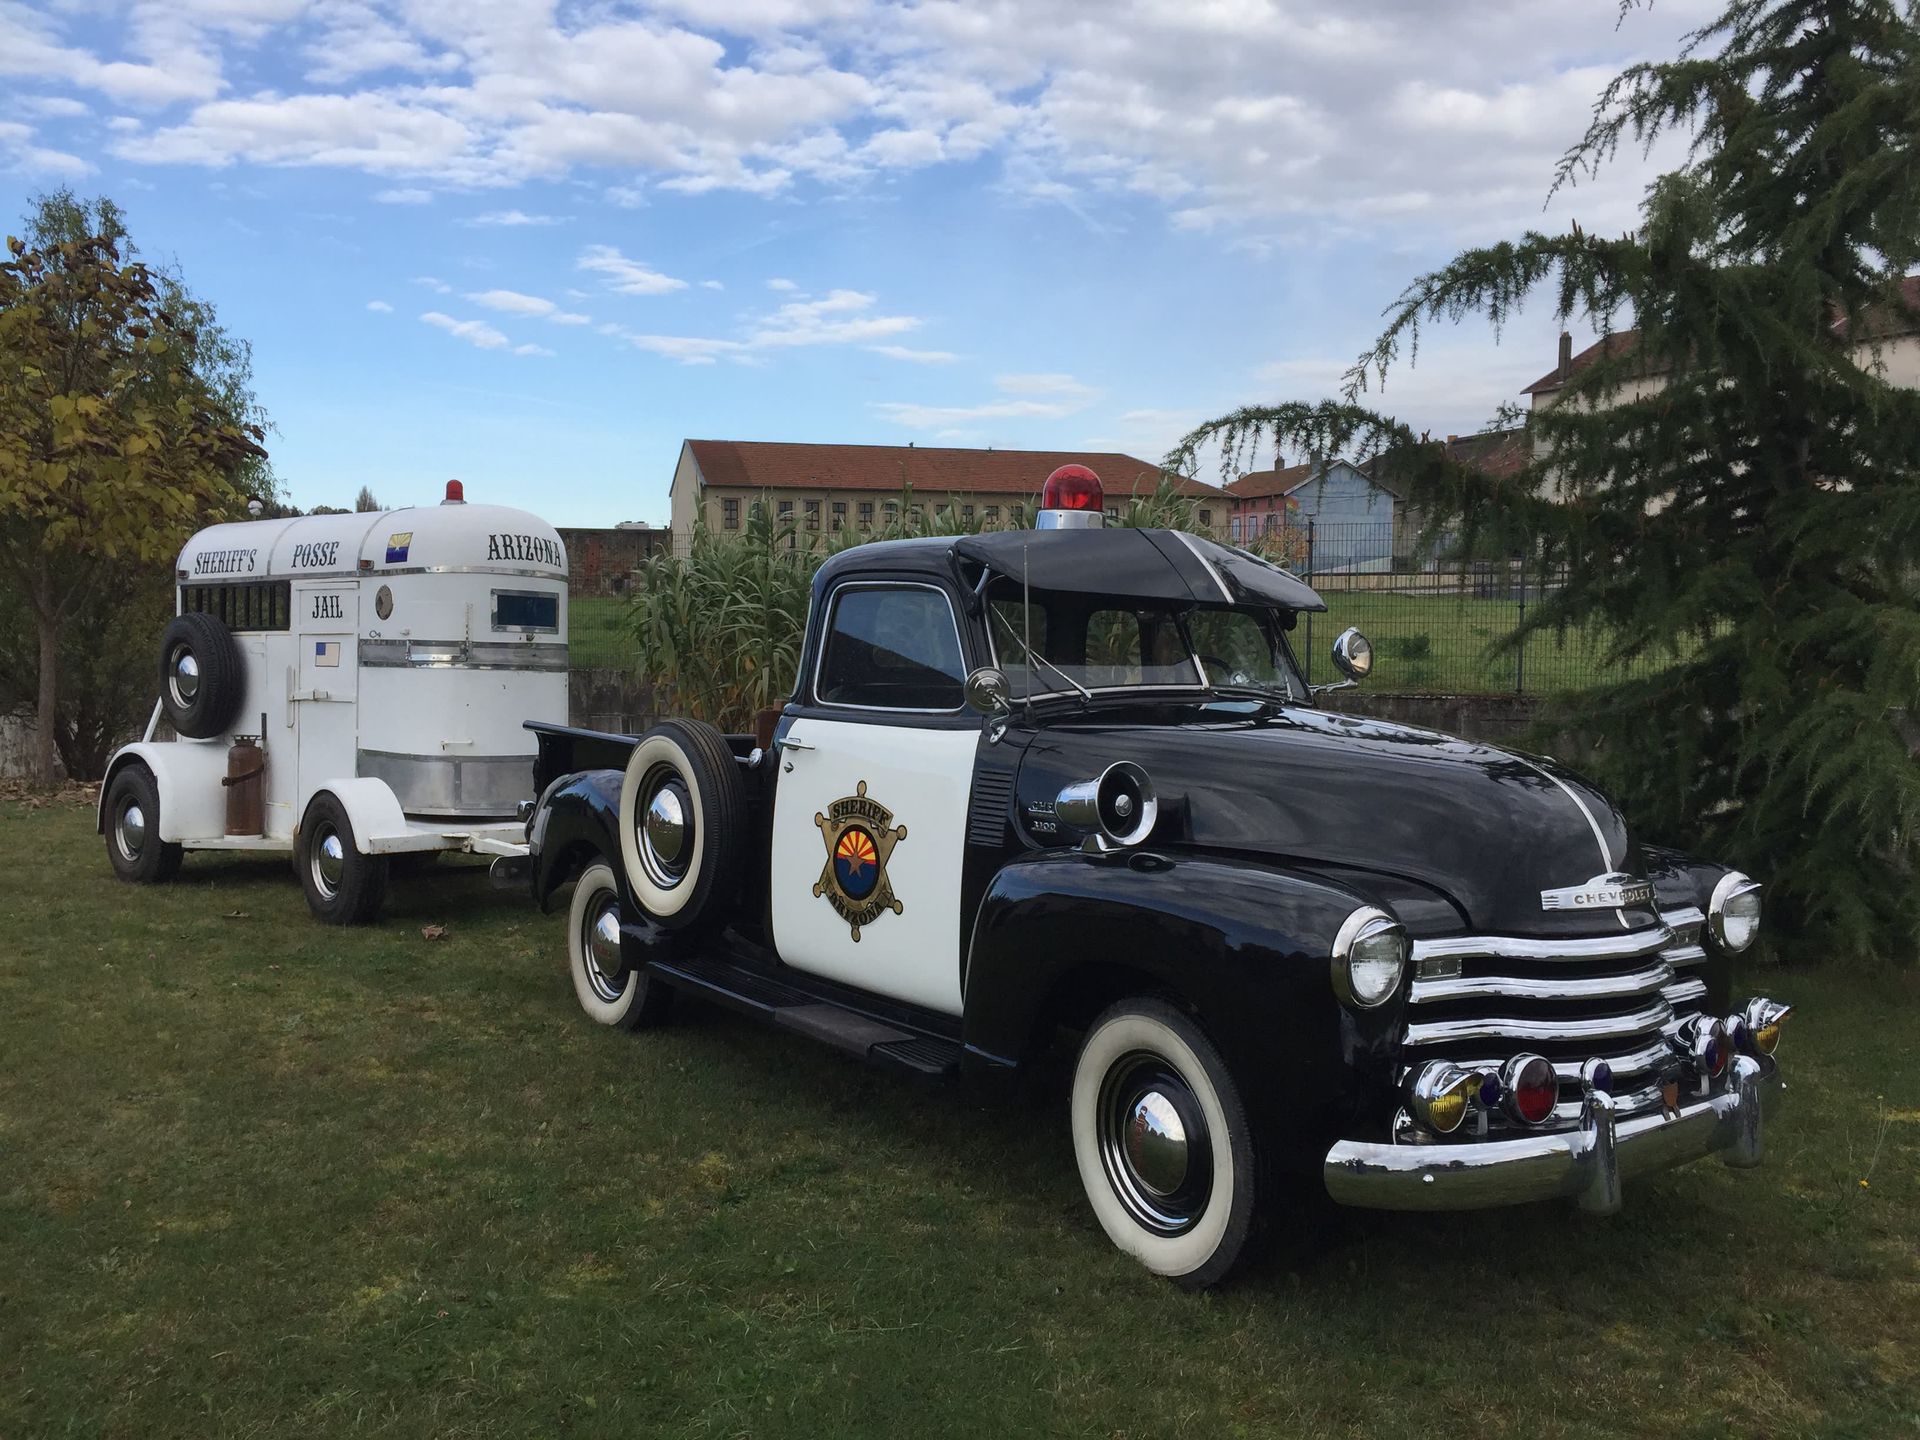 CHEVROLET Pick-up 3100 1949 CGF为皮卡和拖车募集资金

在美国修复的车辆

跌入50年代的美国





这是一辆前警车，所有的配&hellip;